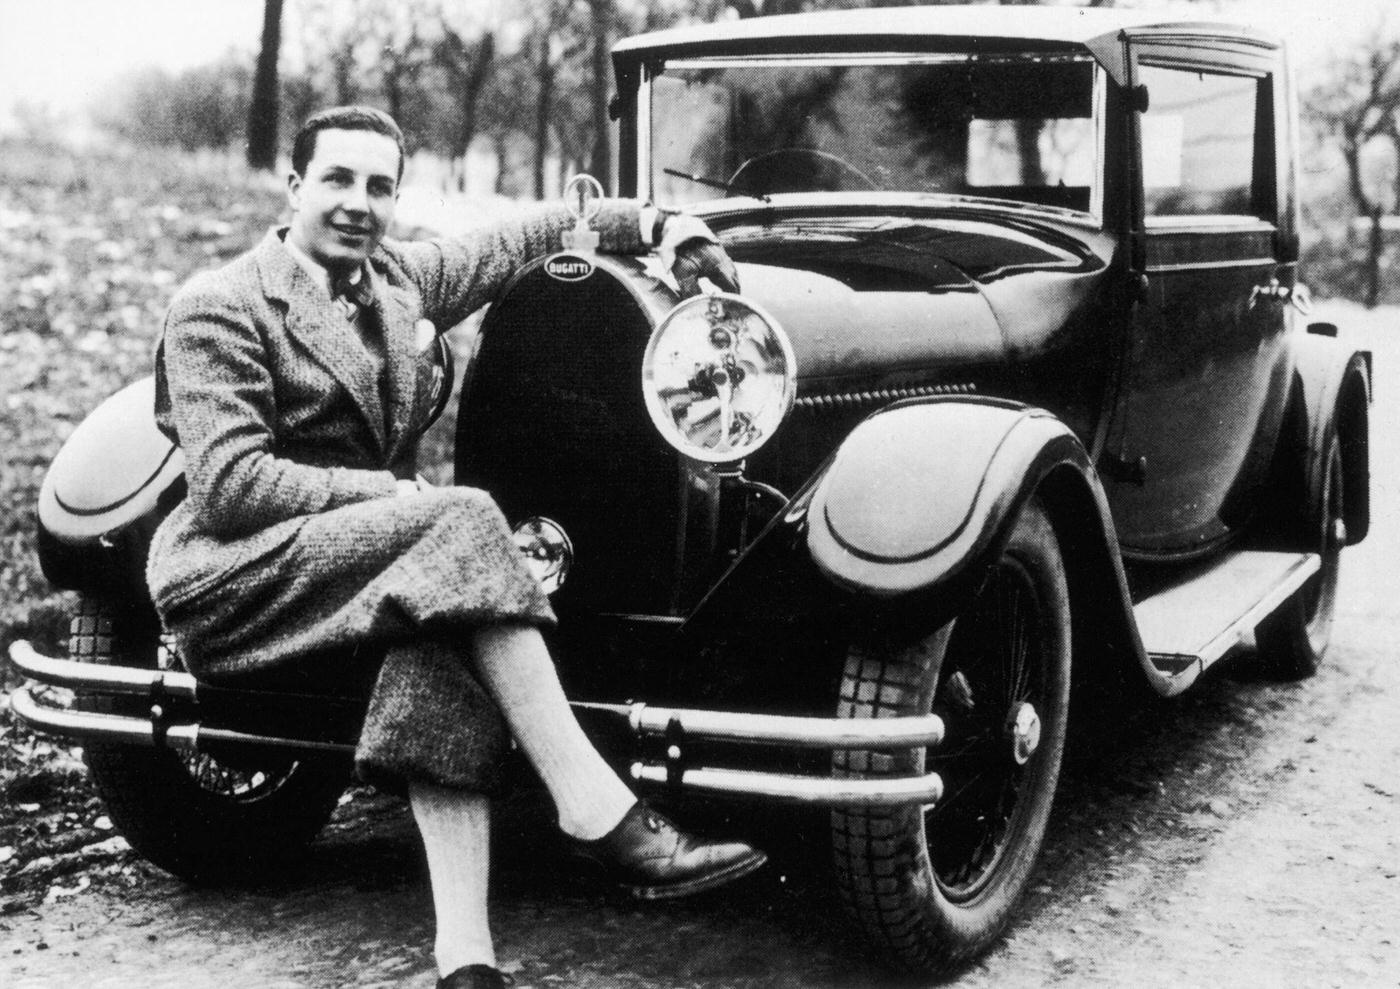 Jean Bugatti with a Bugatti car, 1930s.